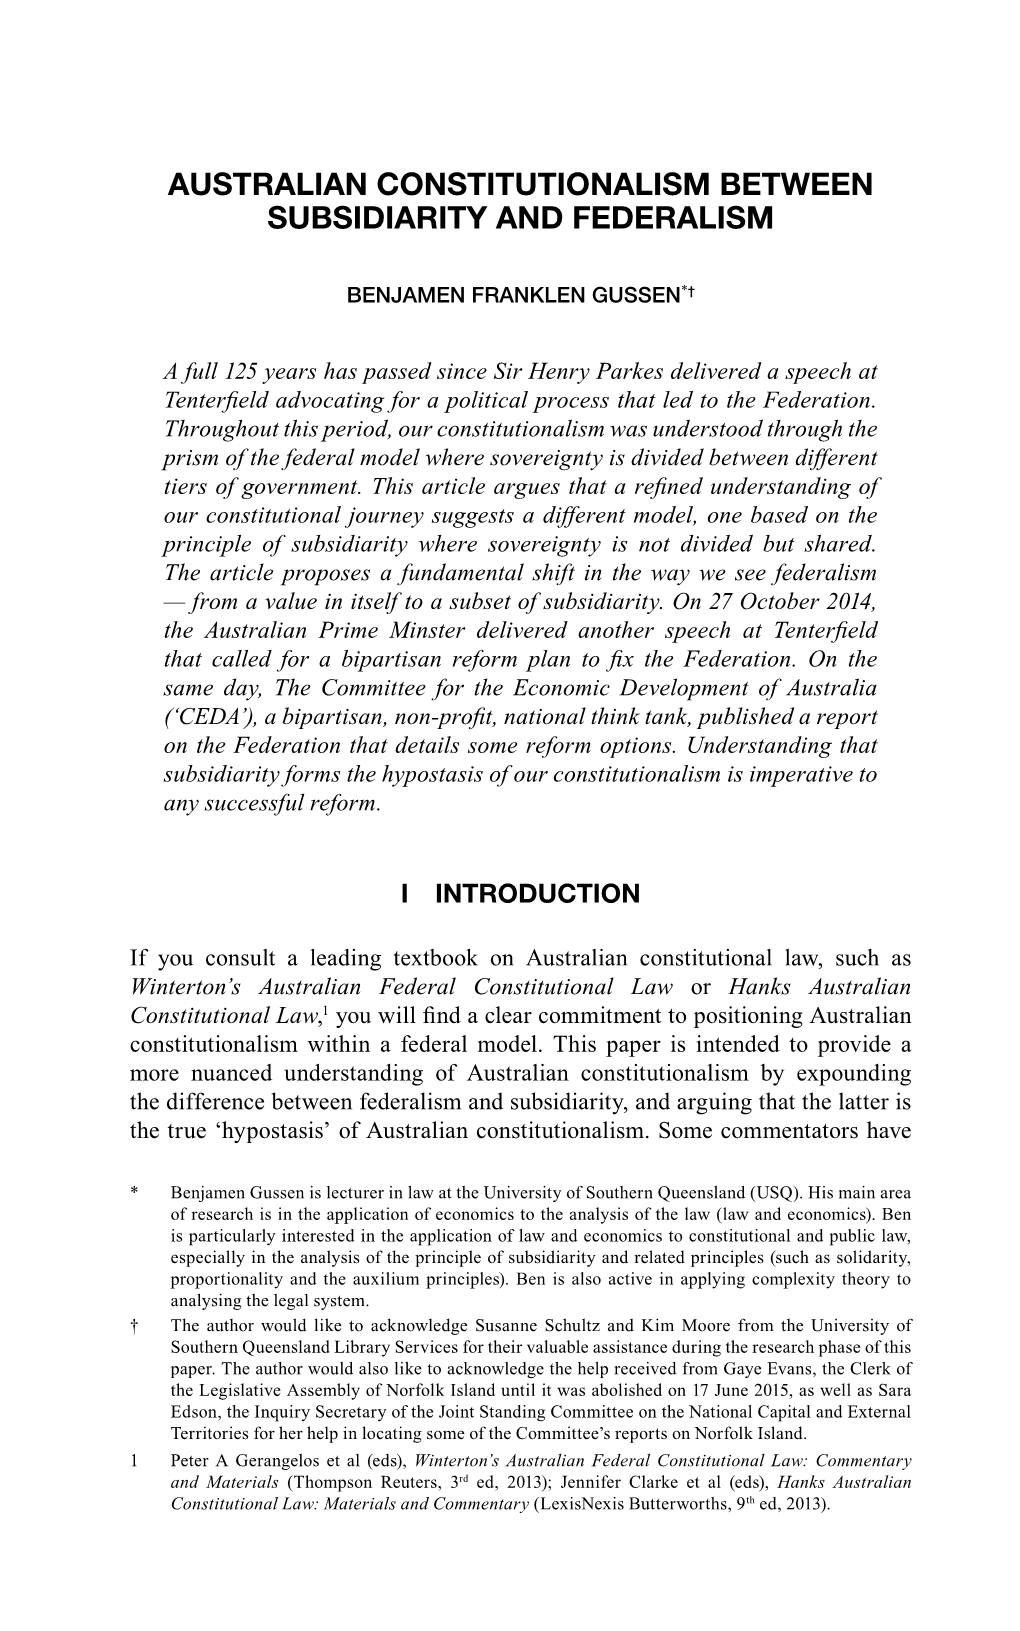 Australian Constitutionalism Between Subsidiarity and Federalism